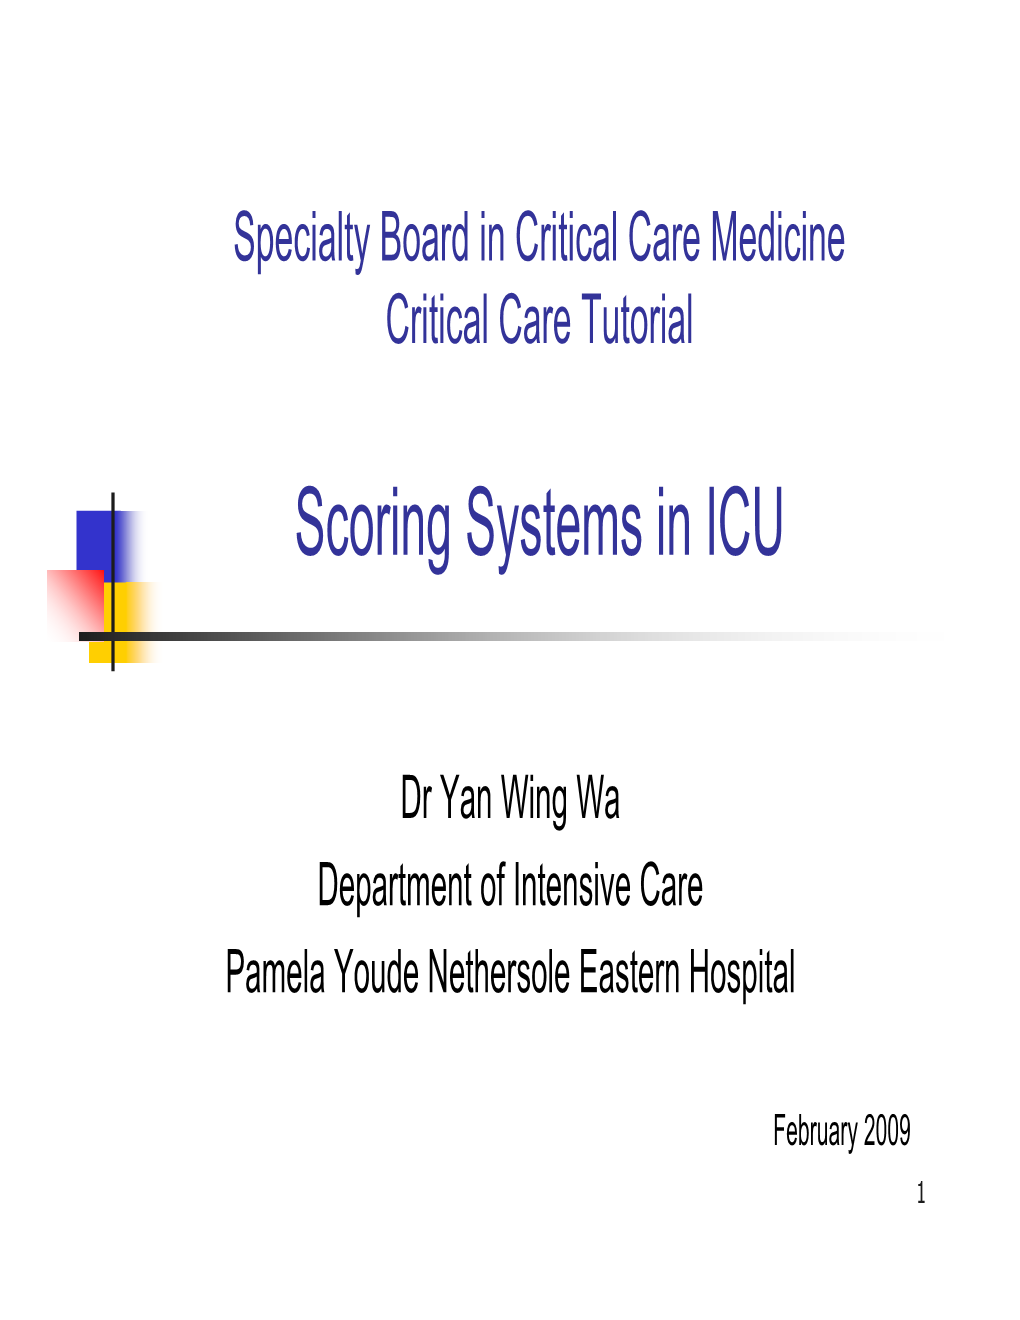 Scoring Systems in ICU